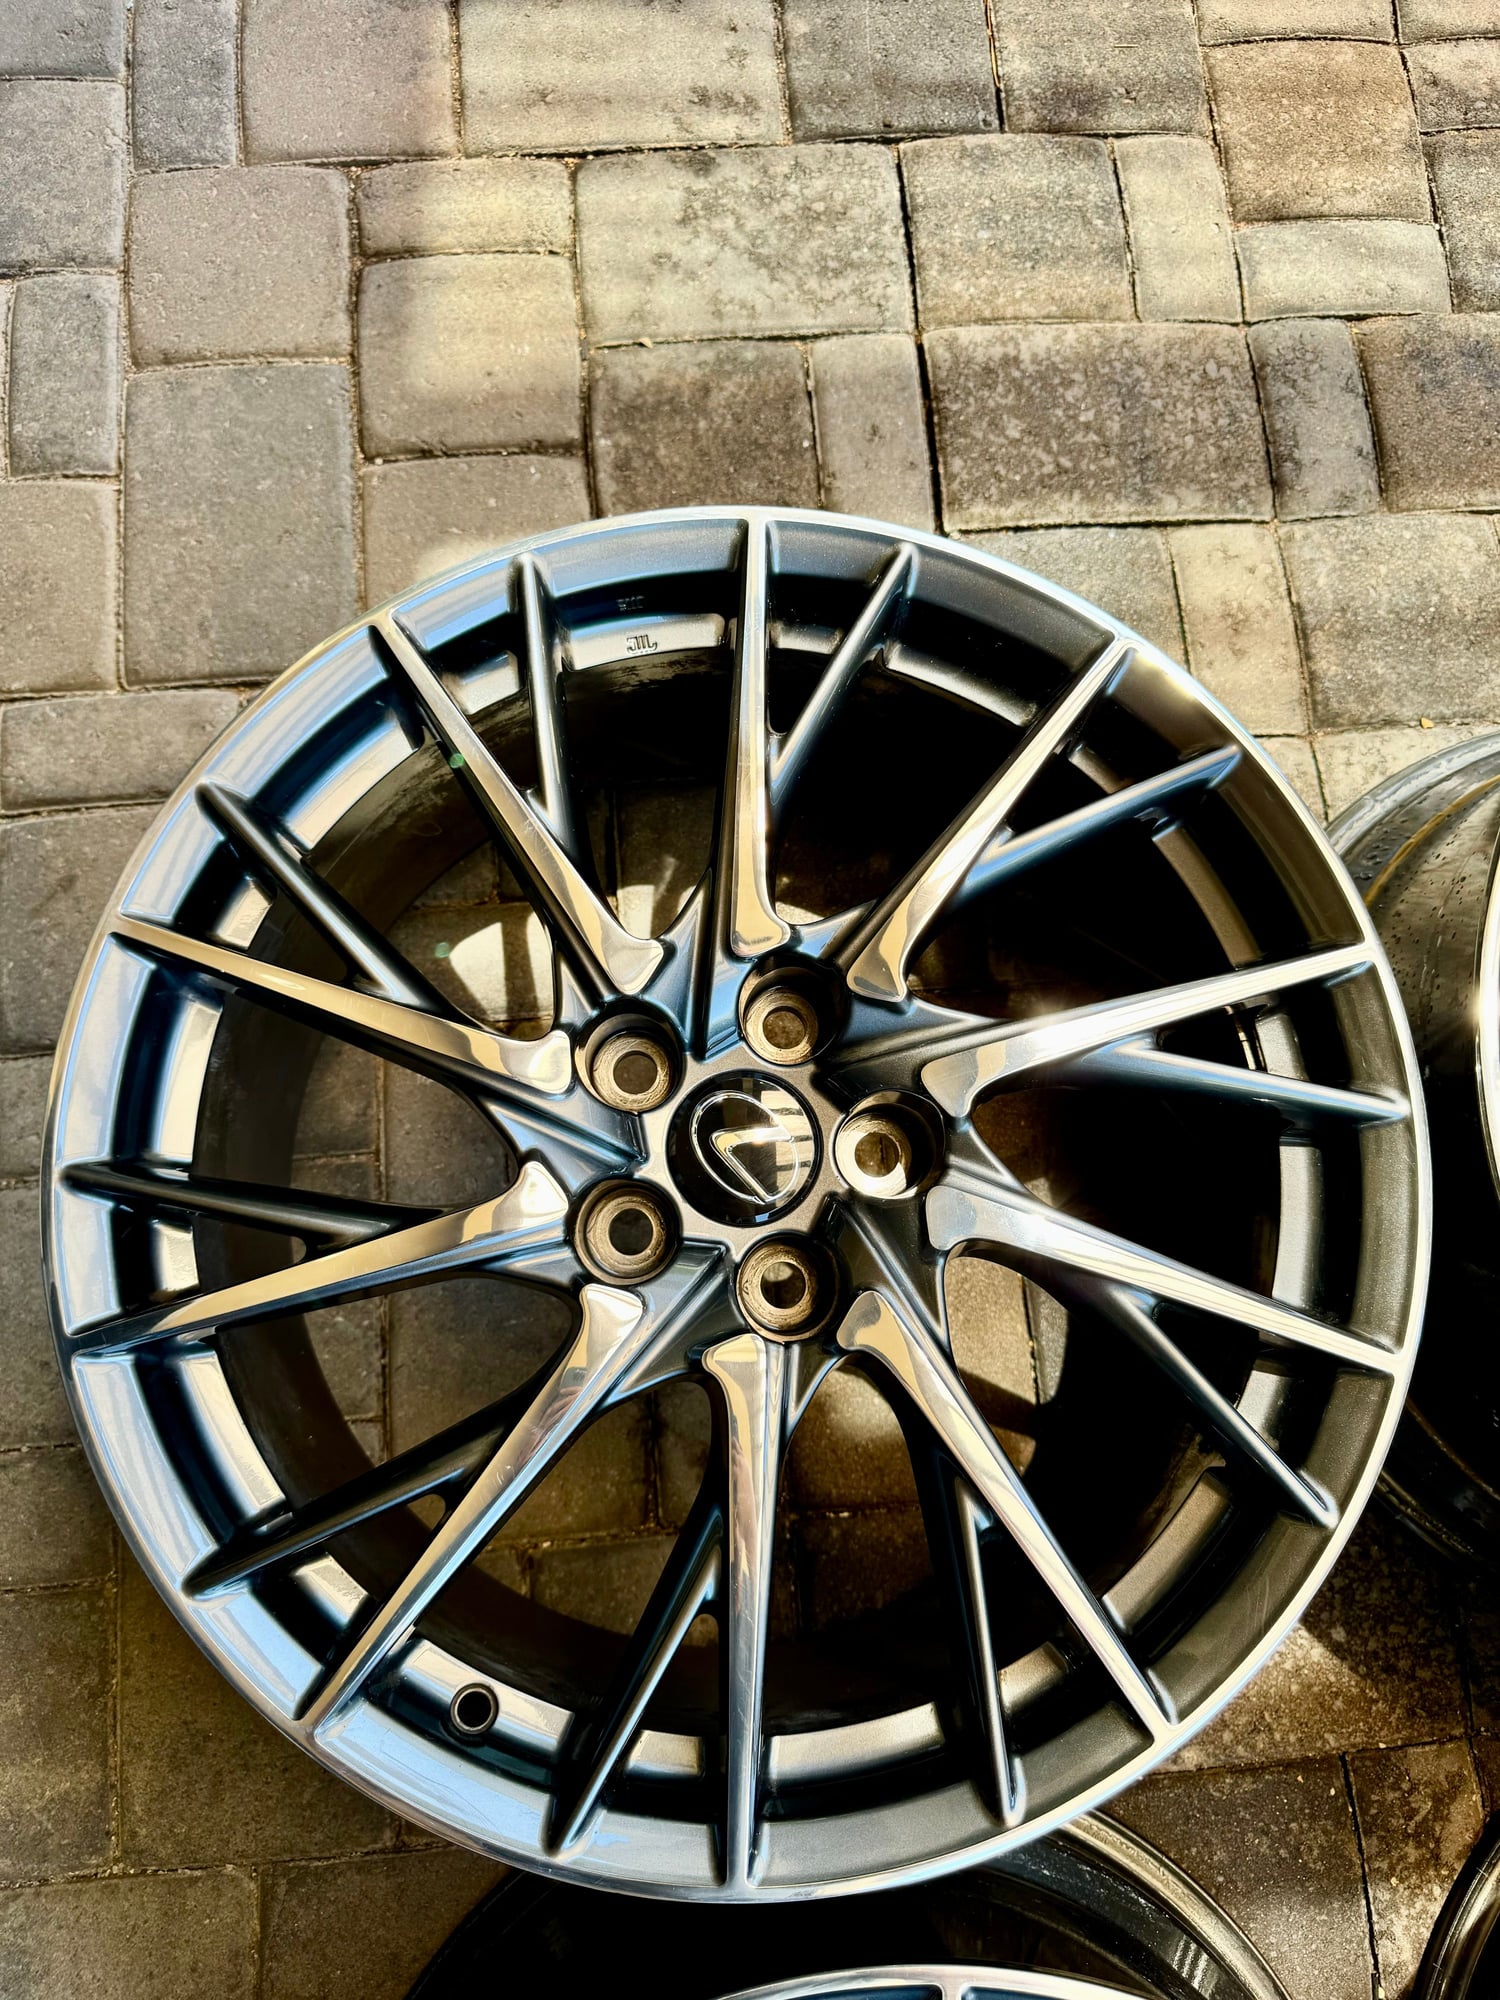 Wheels and Tires/Axles - RCF OEM BBS 20 split spoke polished gunmetal wheels - Used - 2015 to 2024 Lexus RC F - Buckeye, AZ 85396, United States